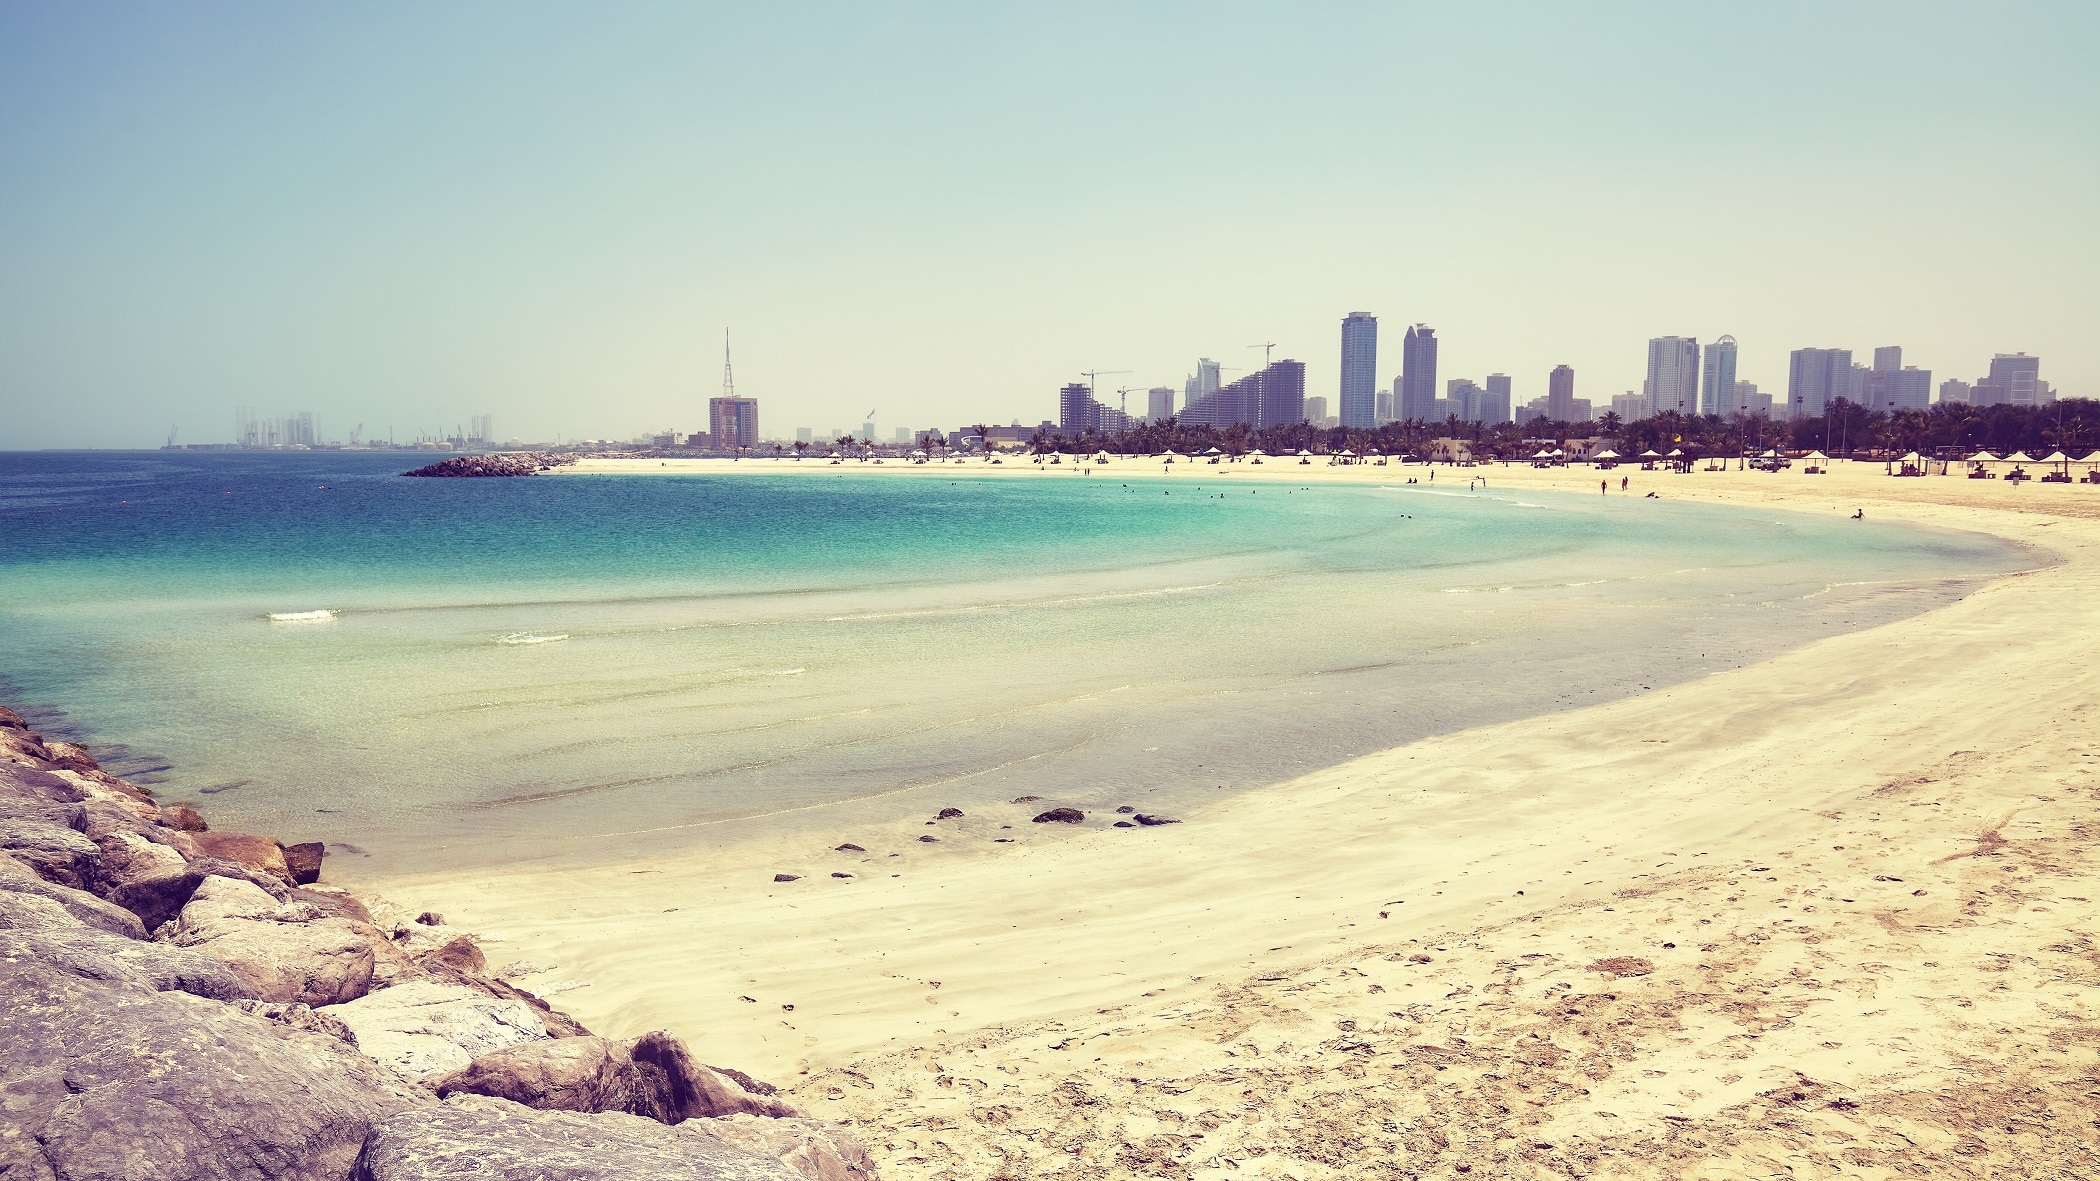 Al Mamzar Beach in Dubai, Sharjah city in distance, UAE.